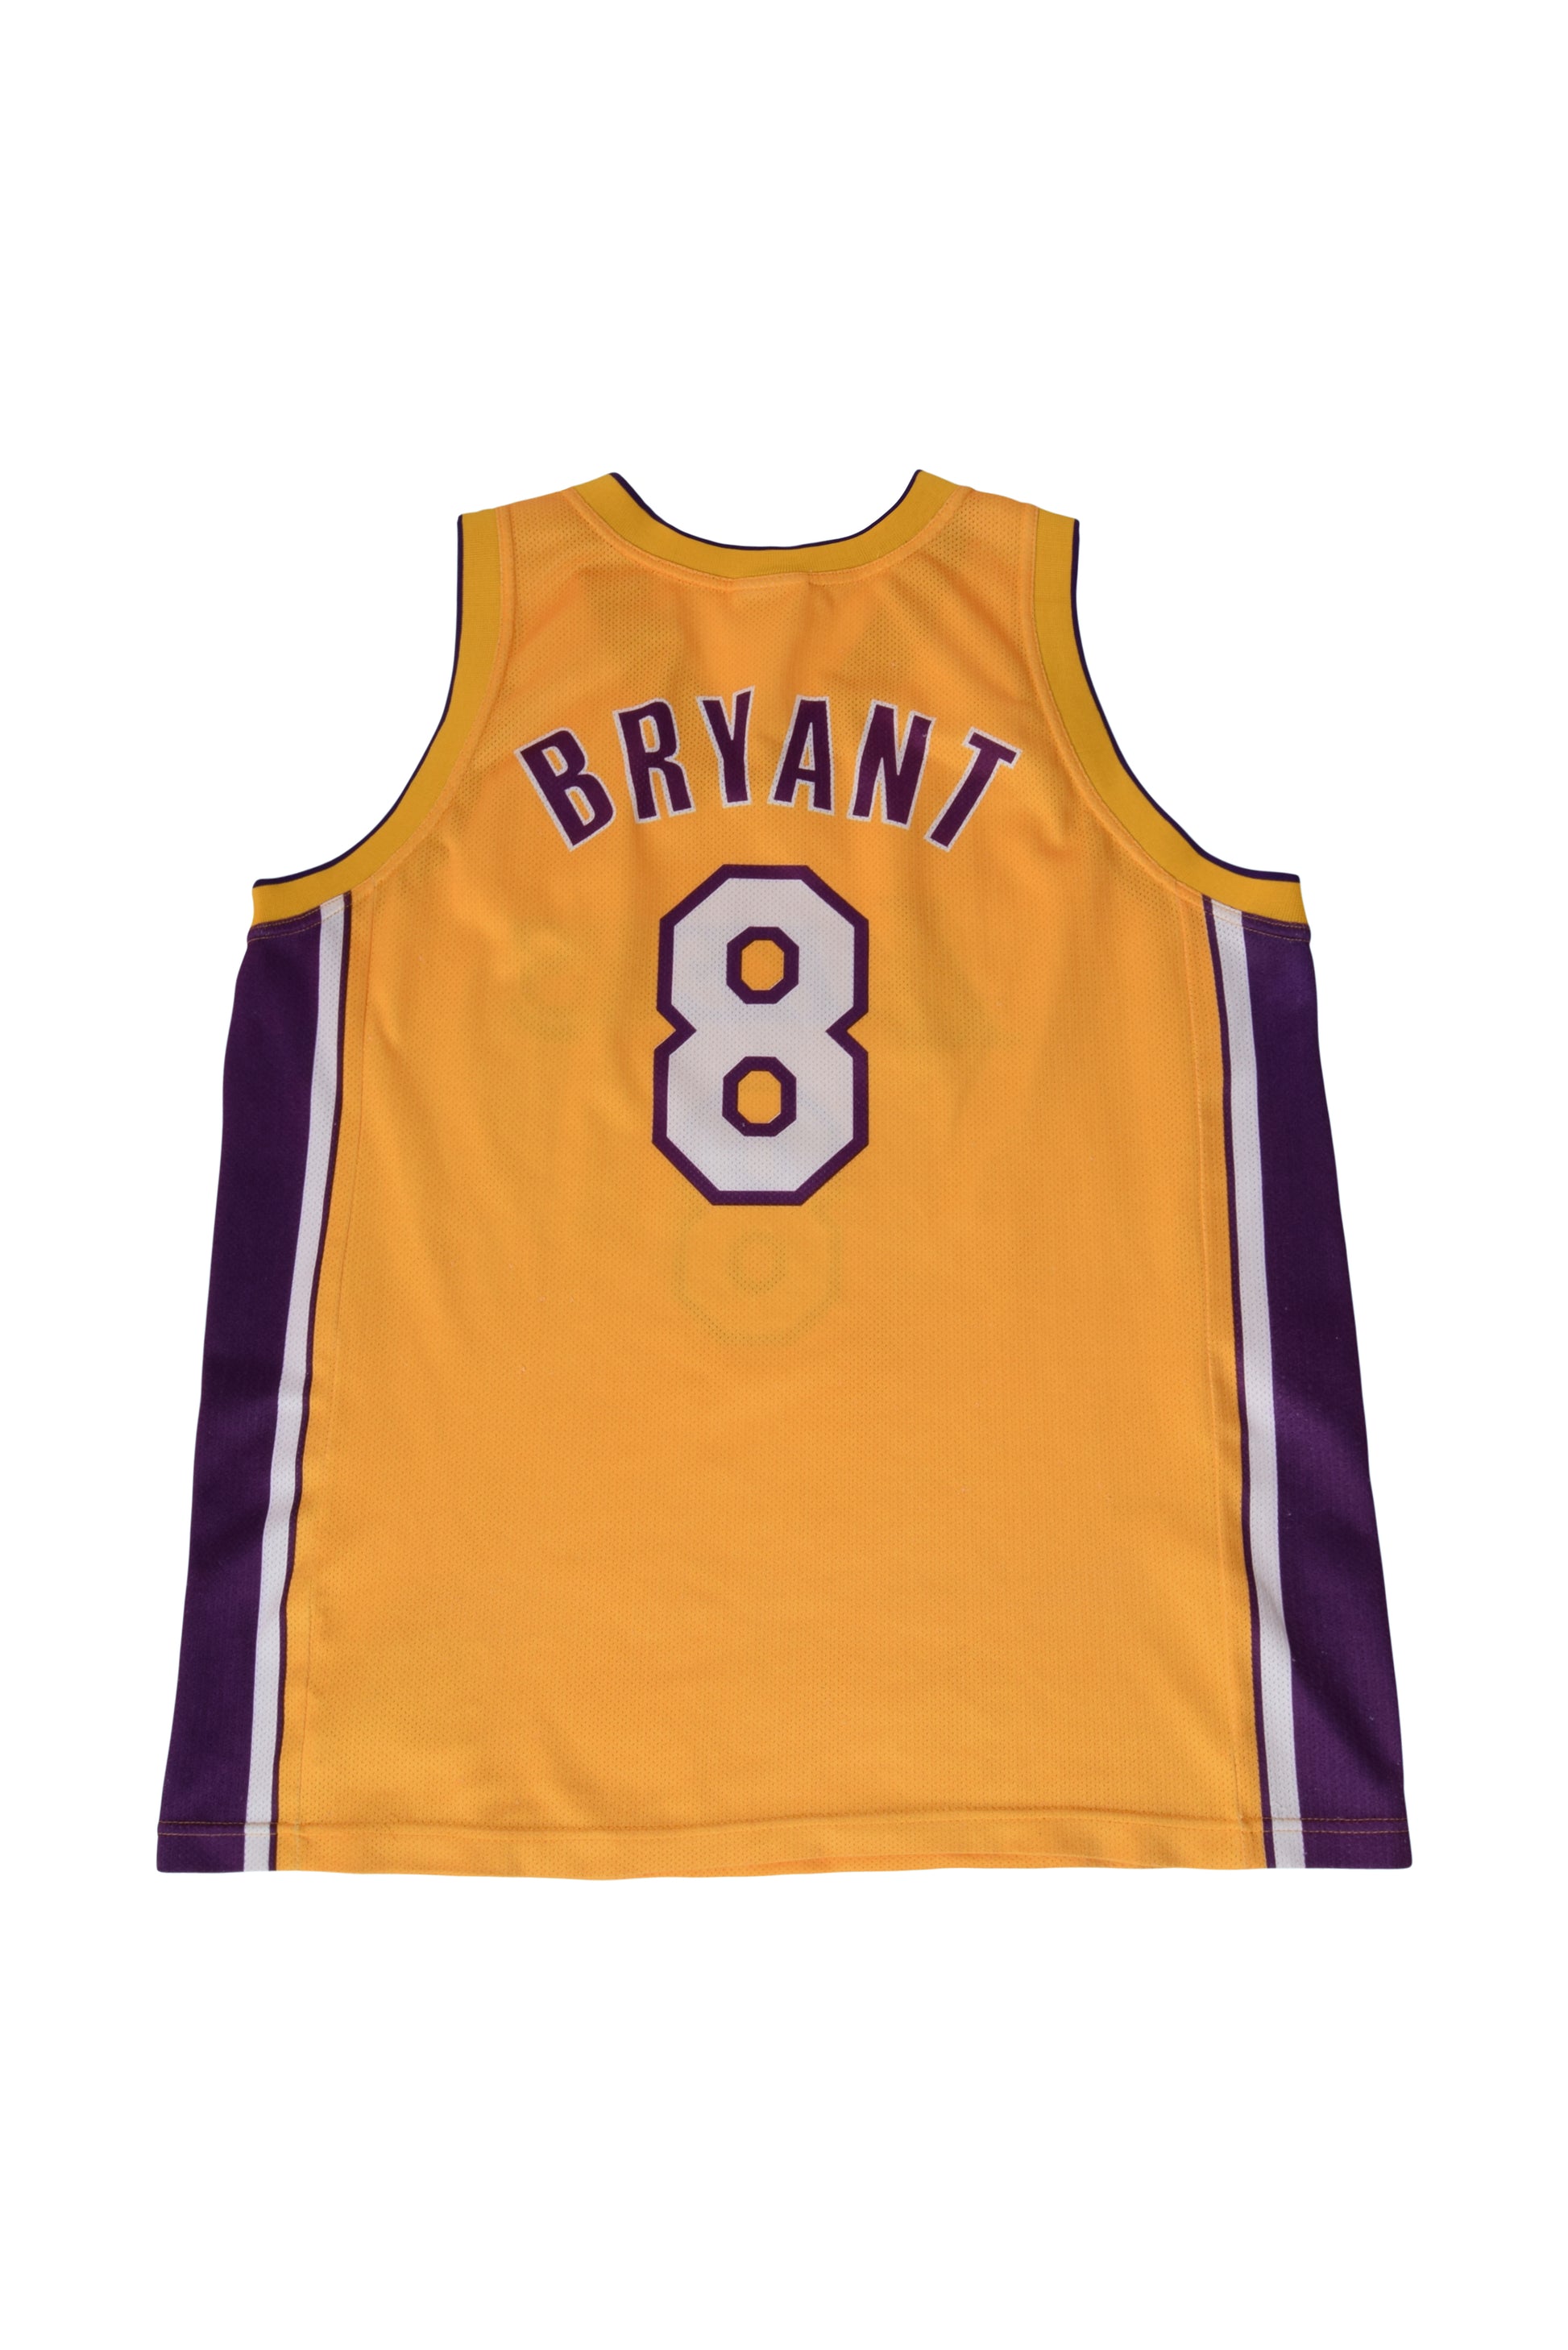 LA LAKERS Kobe Bryant #8 purple jersey  Kobe bryant, Kobe bryant 8, Lakers  kobe bryant